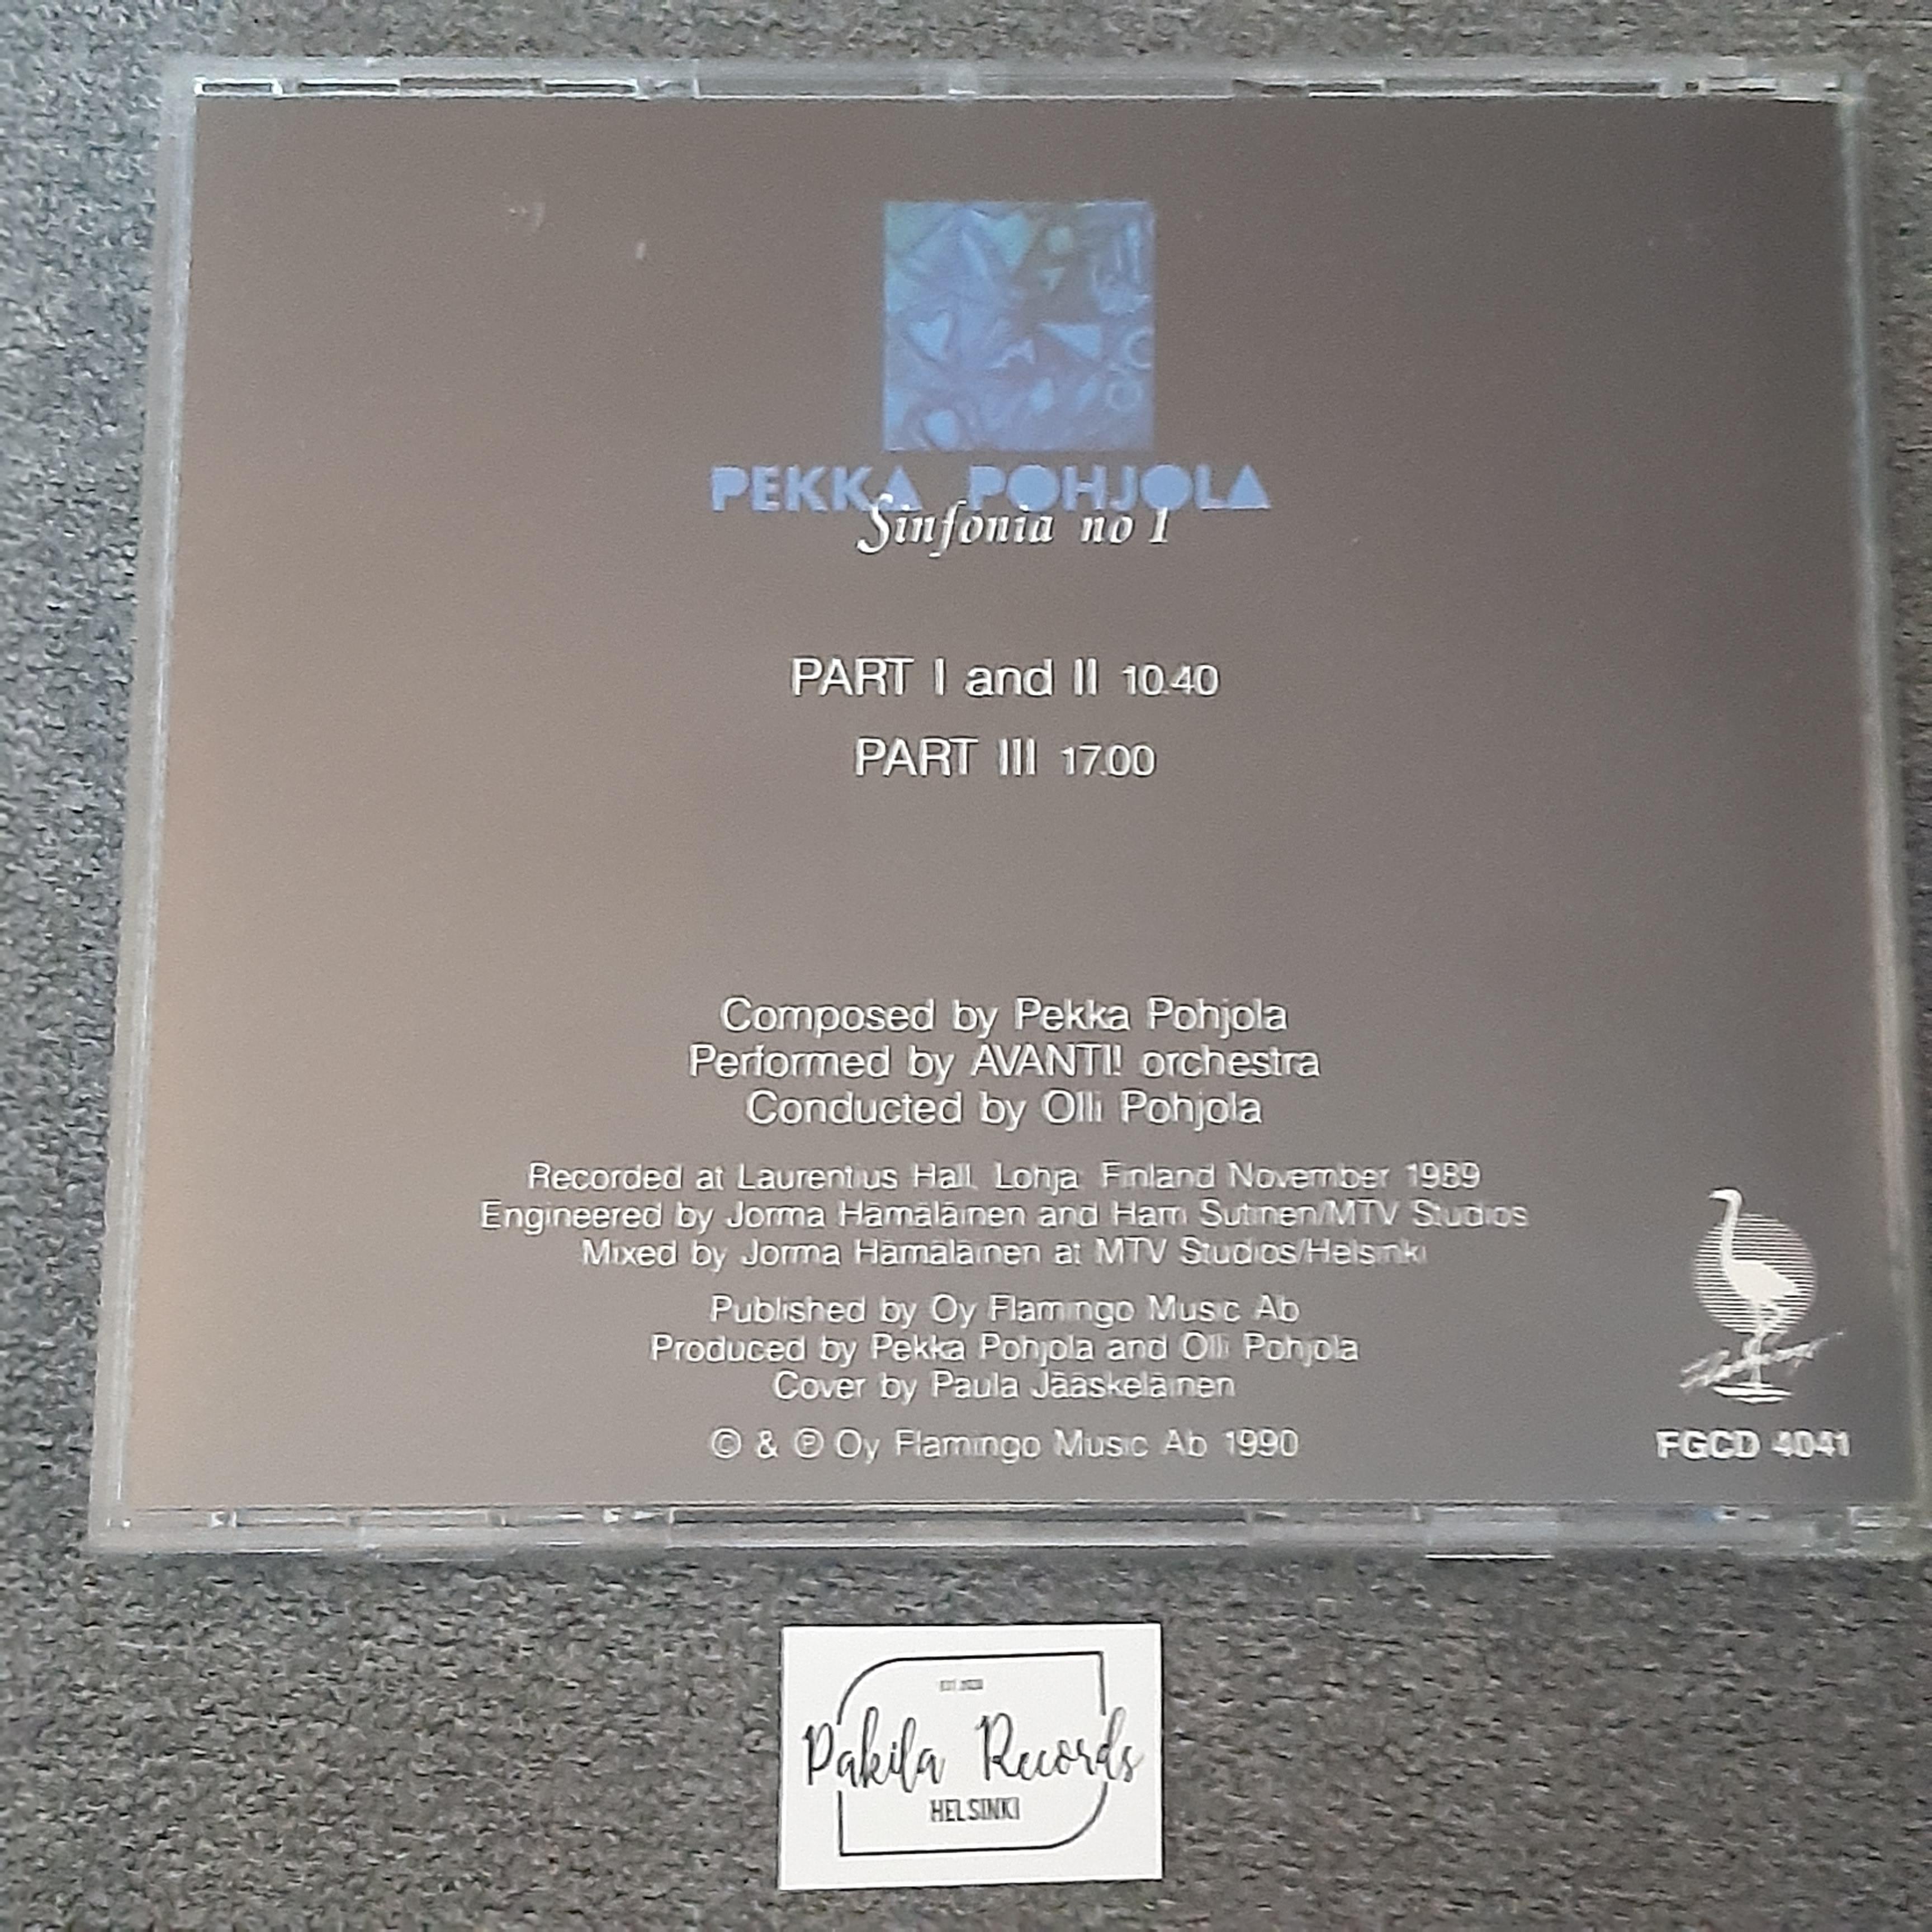 Pekka Pohjola, Avanti! Orchestra - Sinfonia No 1 - CD (käytetty)